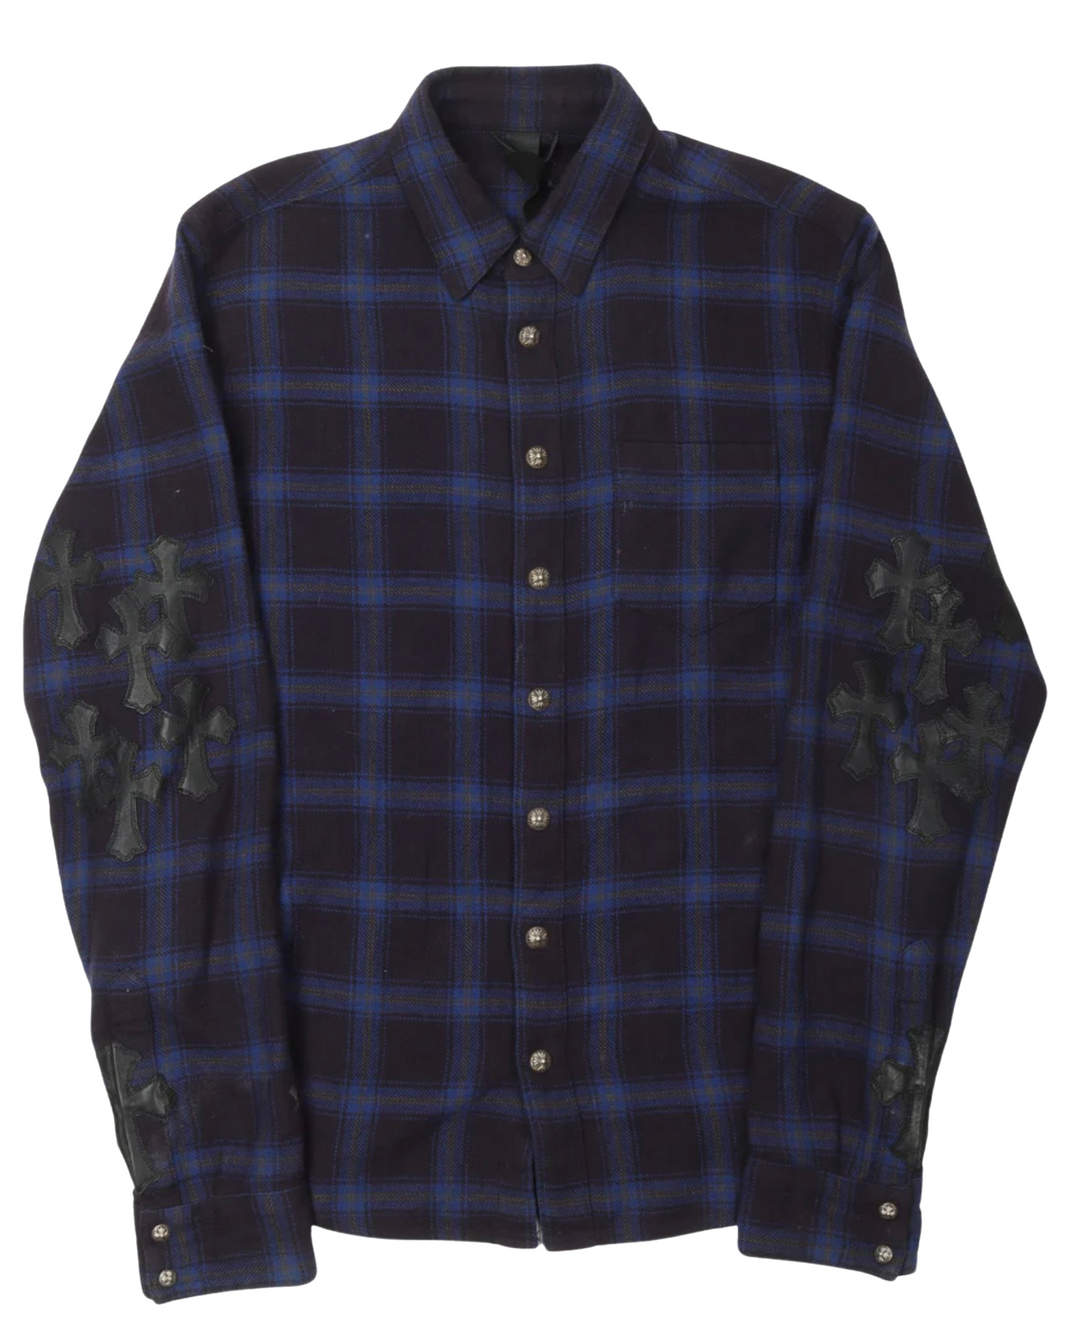 Chrome Hearts 'Leather Cross' Blue/Black Flannel Shirt